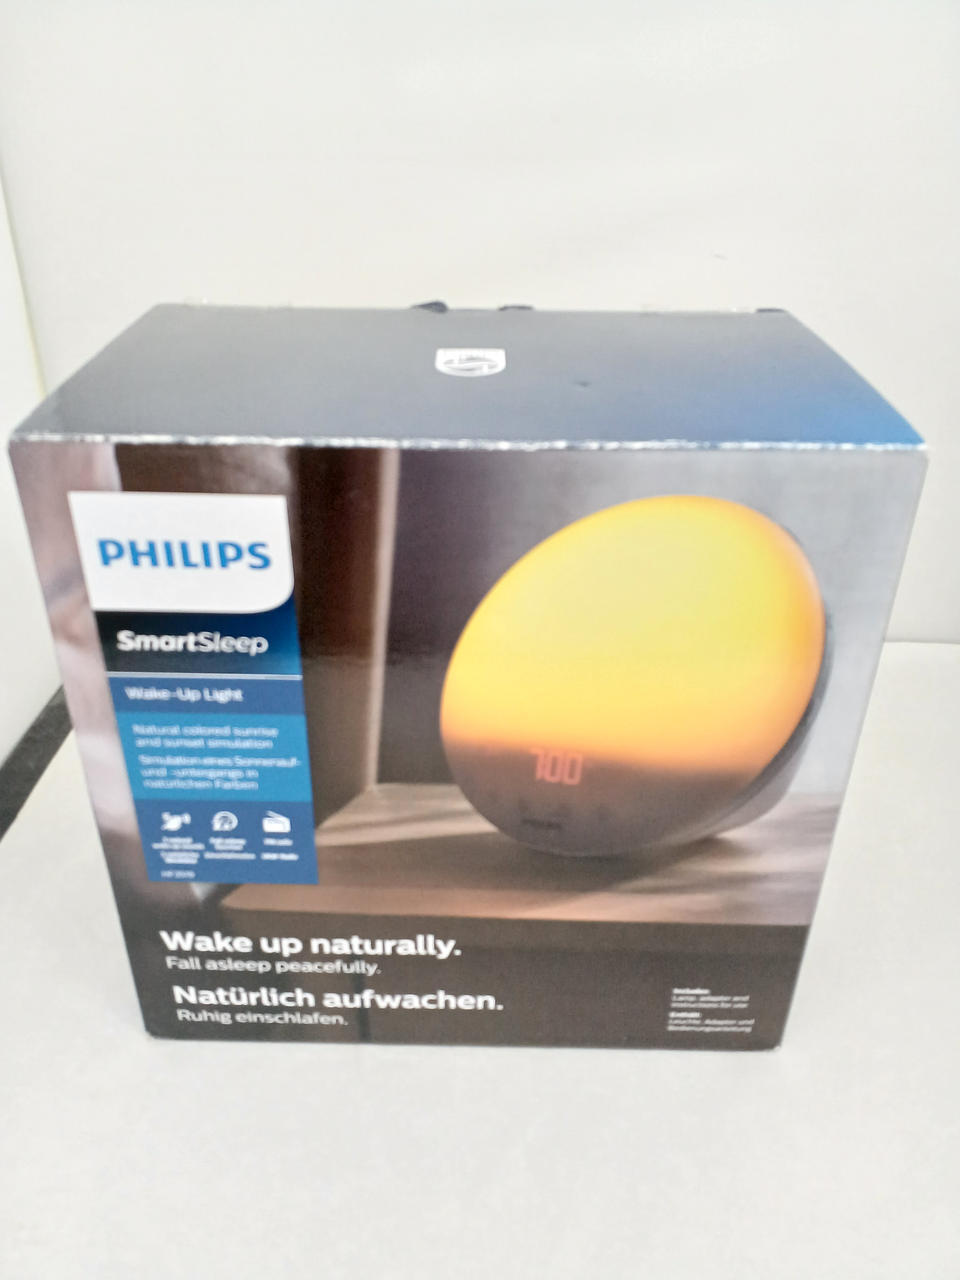 Philips Smartsleep Hf3519 Smart Alarm Clock